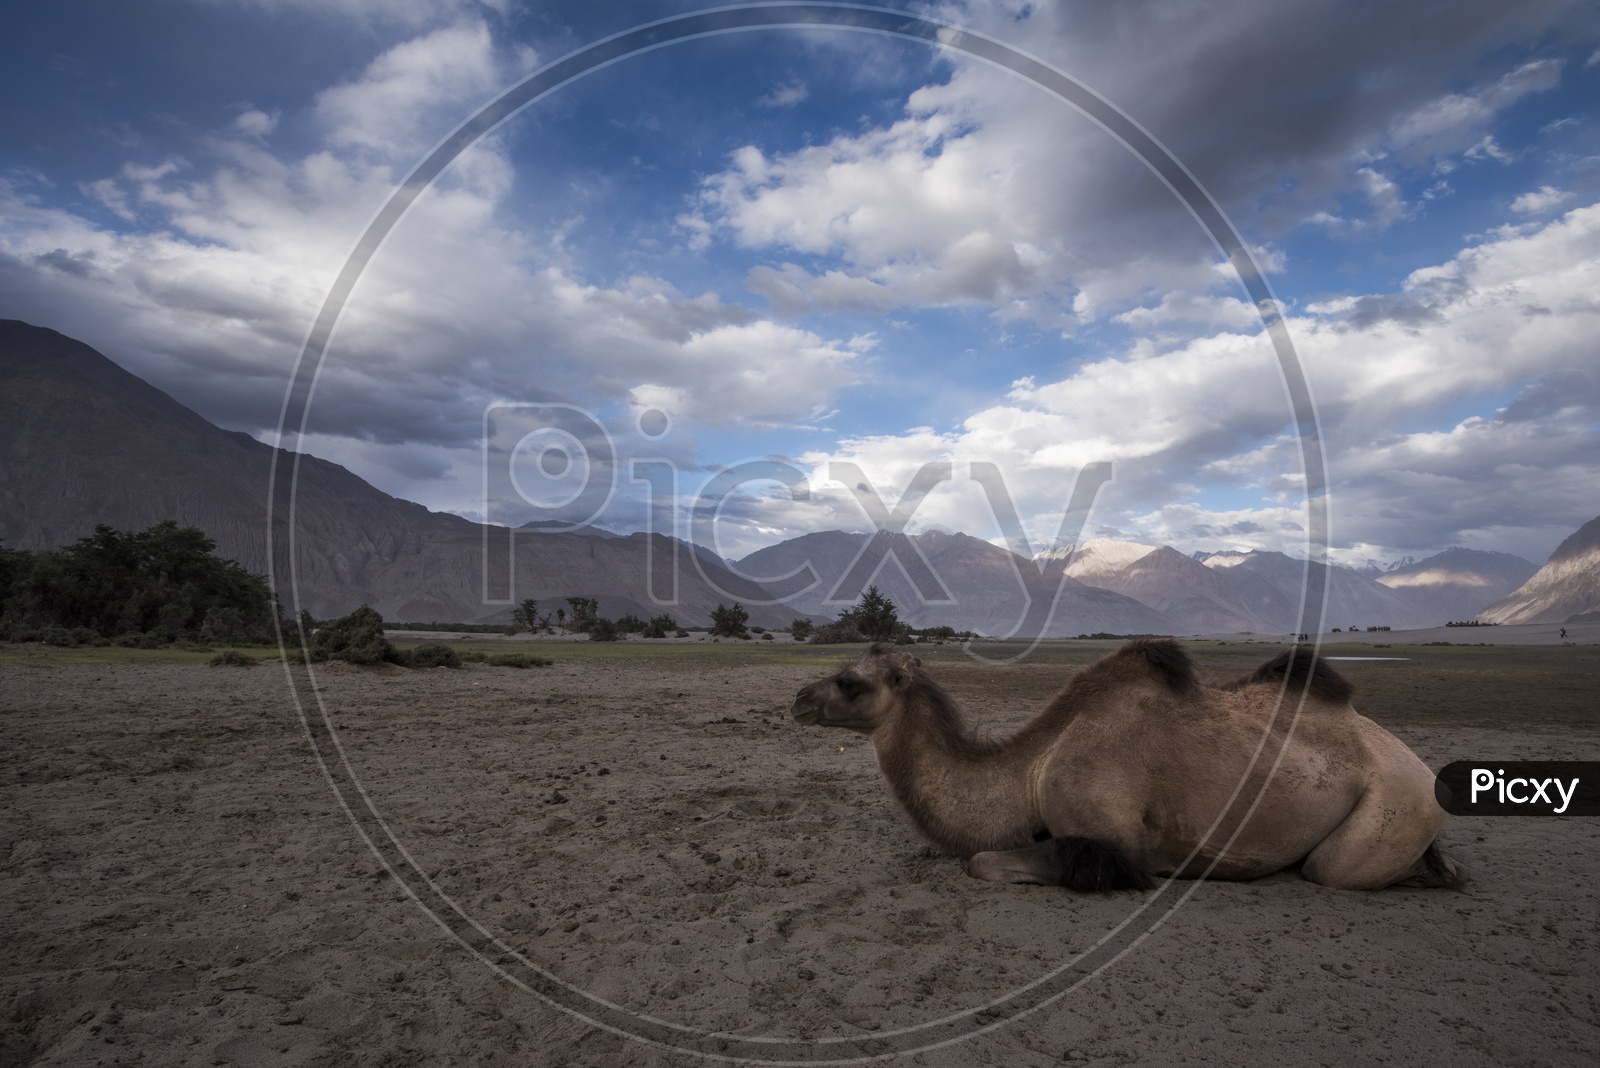 Landscapes of leh - mountains, camel & coulds